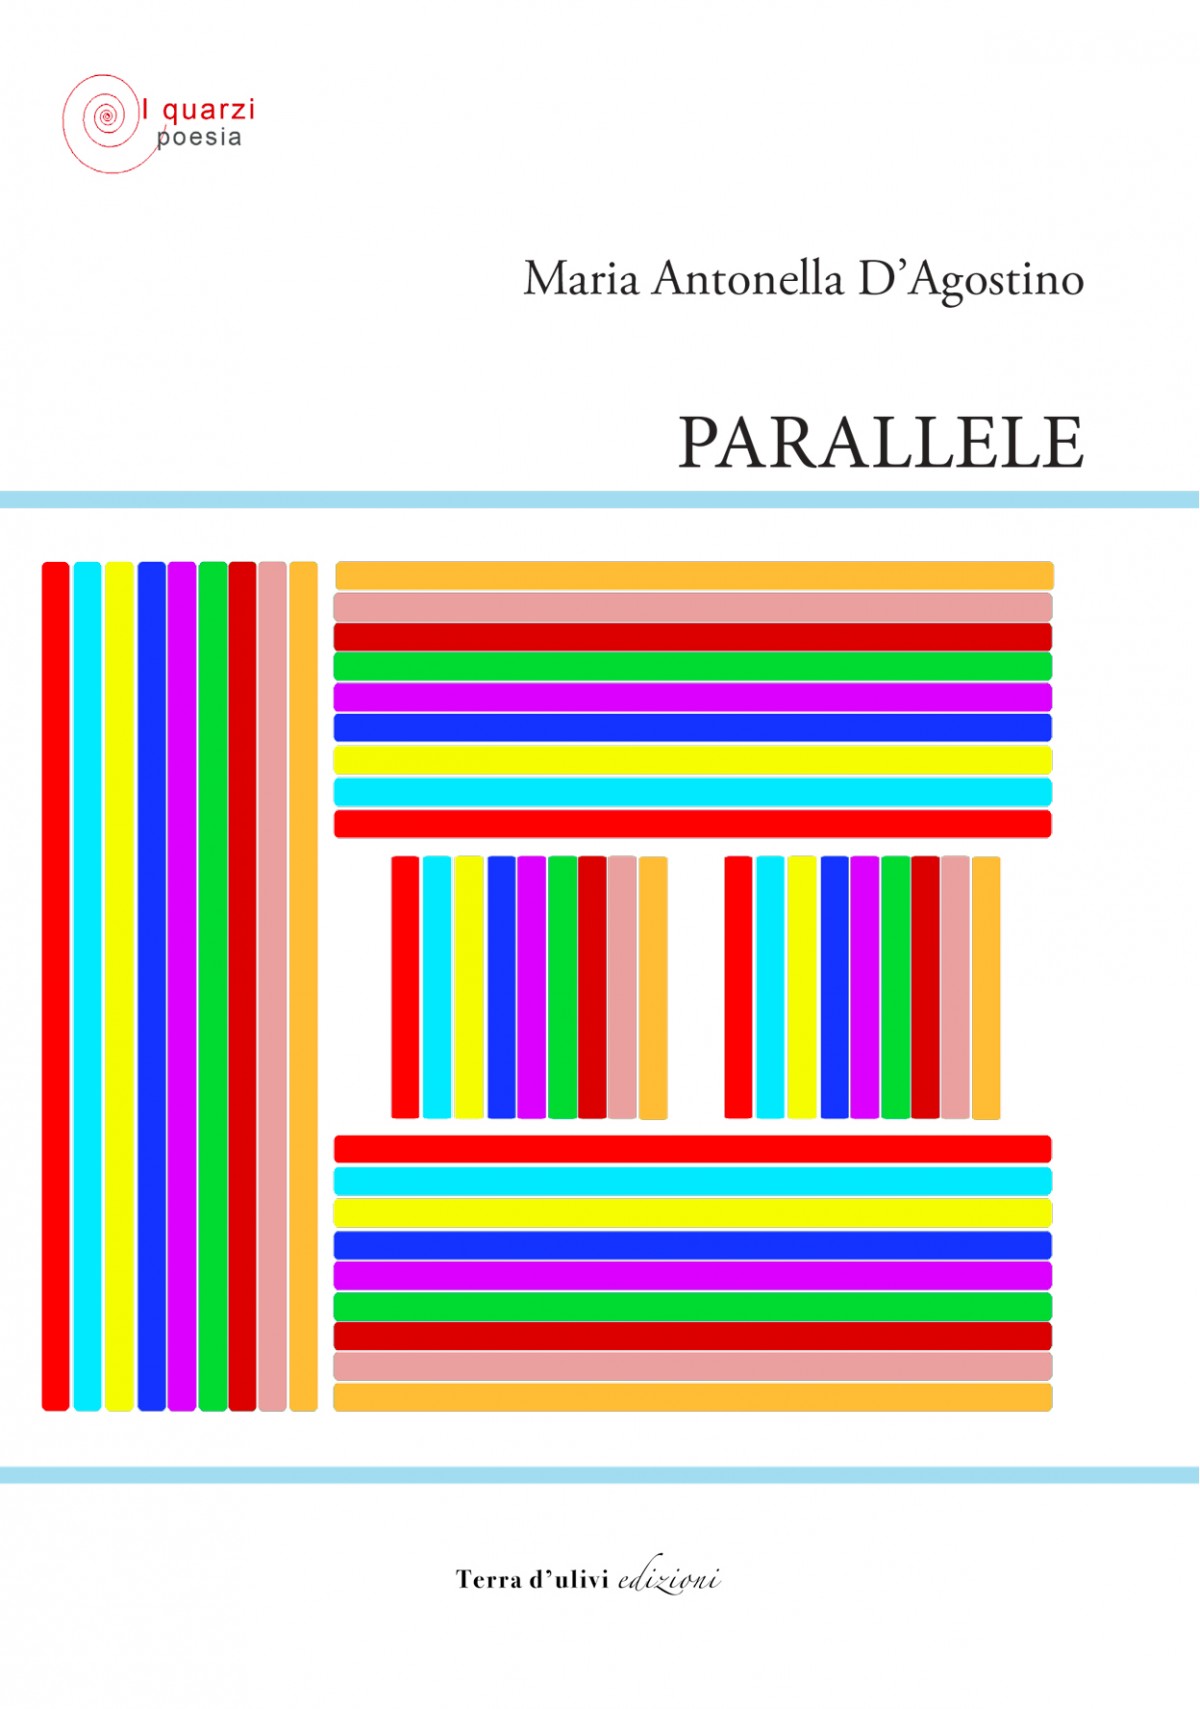 Maria Antonella D'Agostino legge da "Parallele"